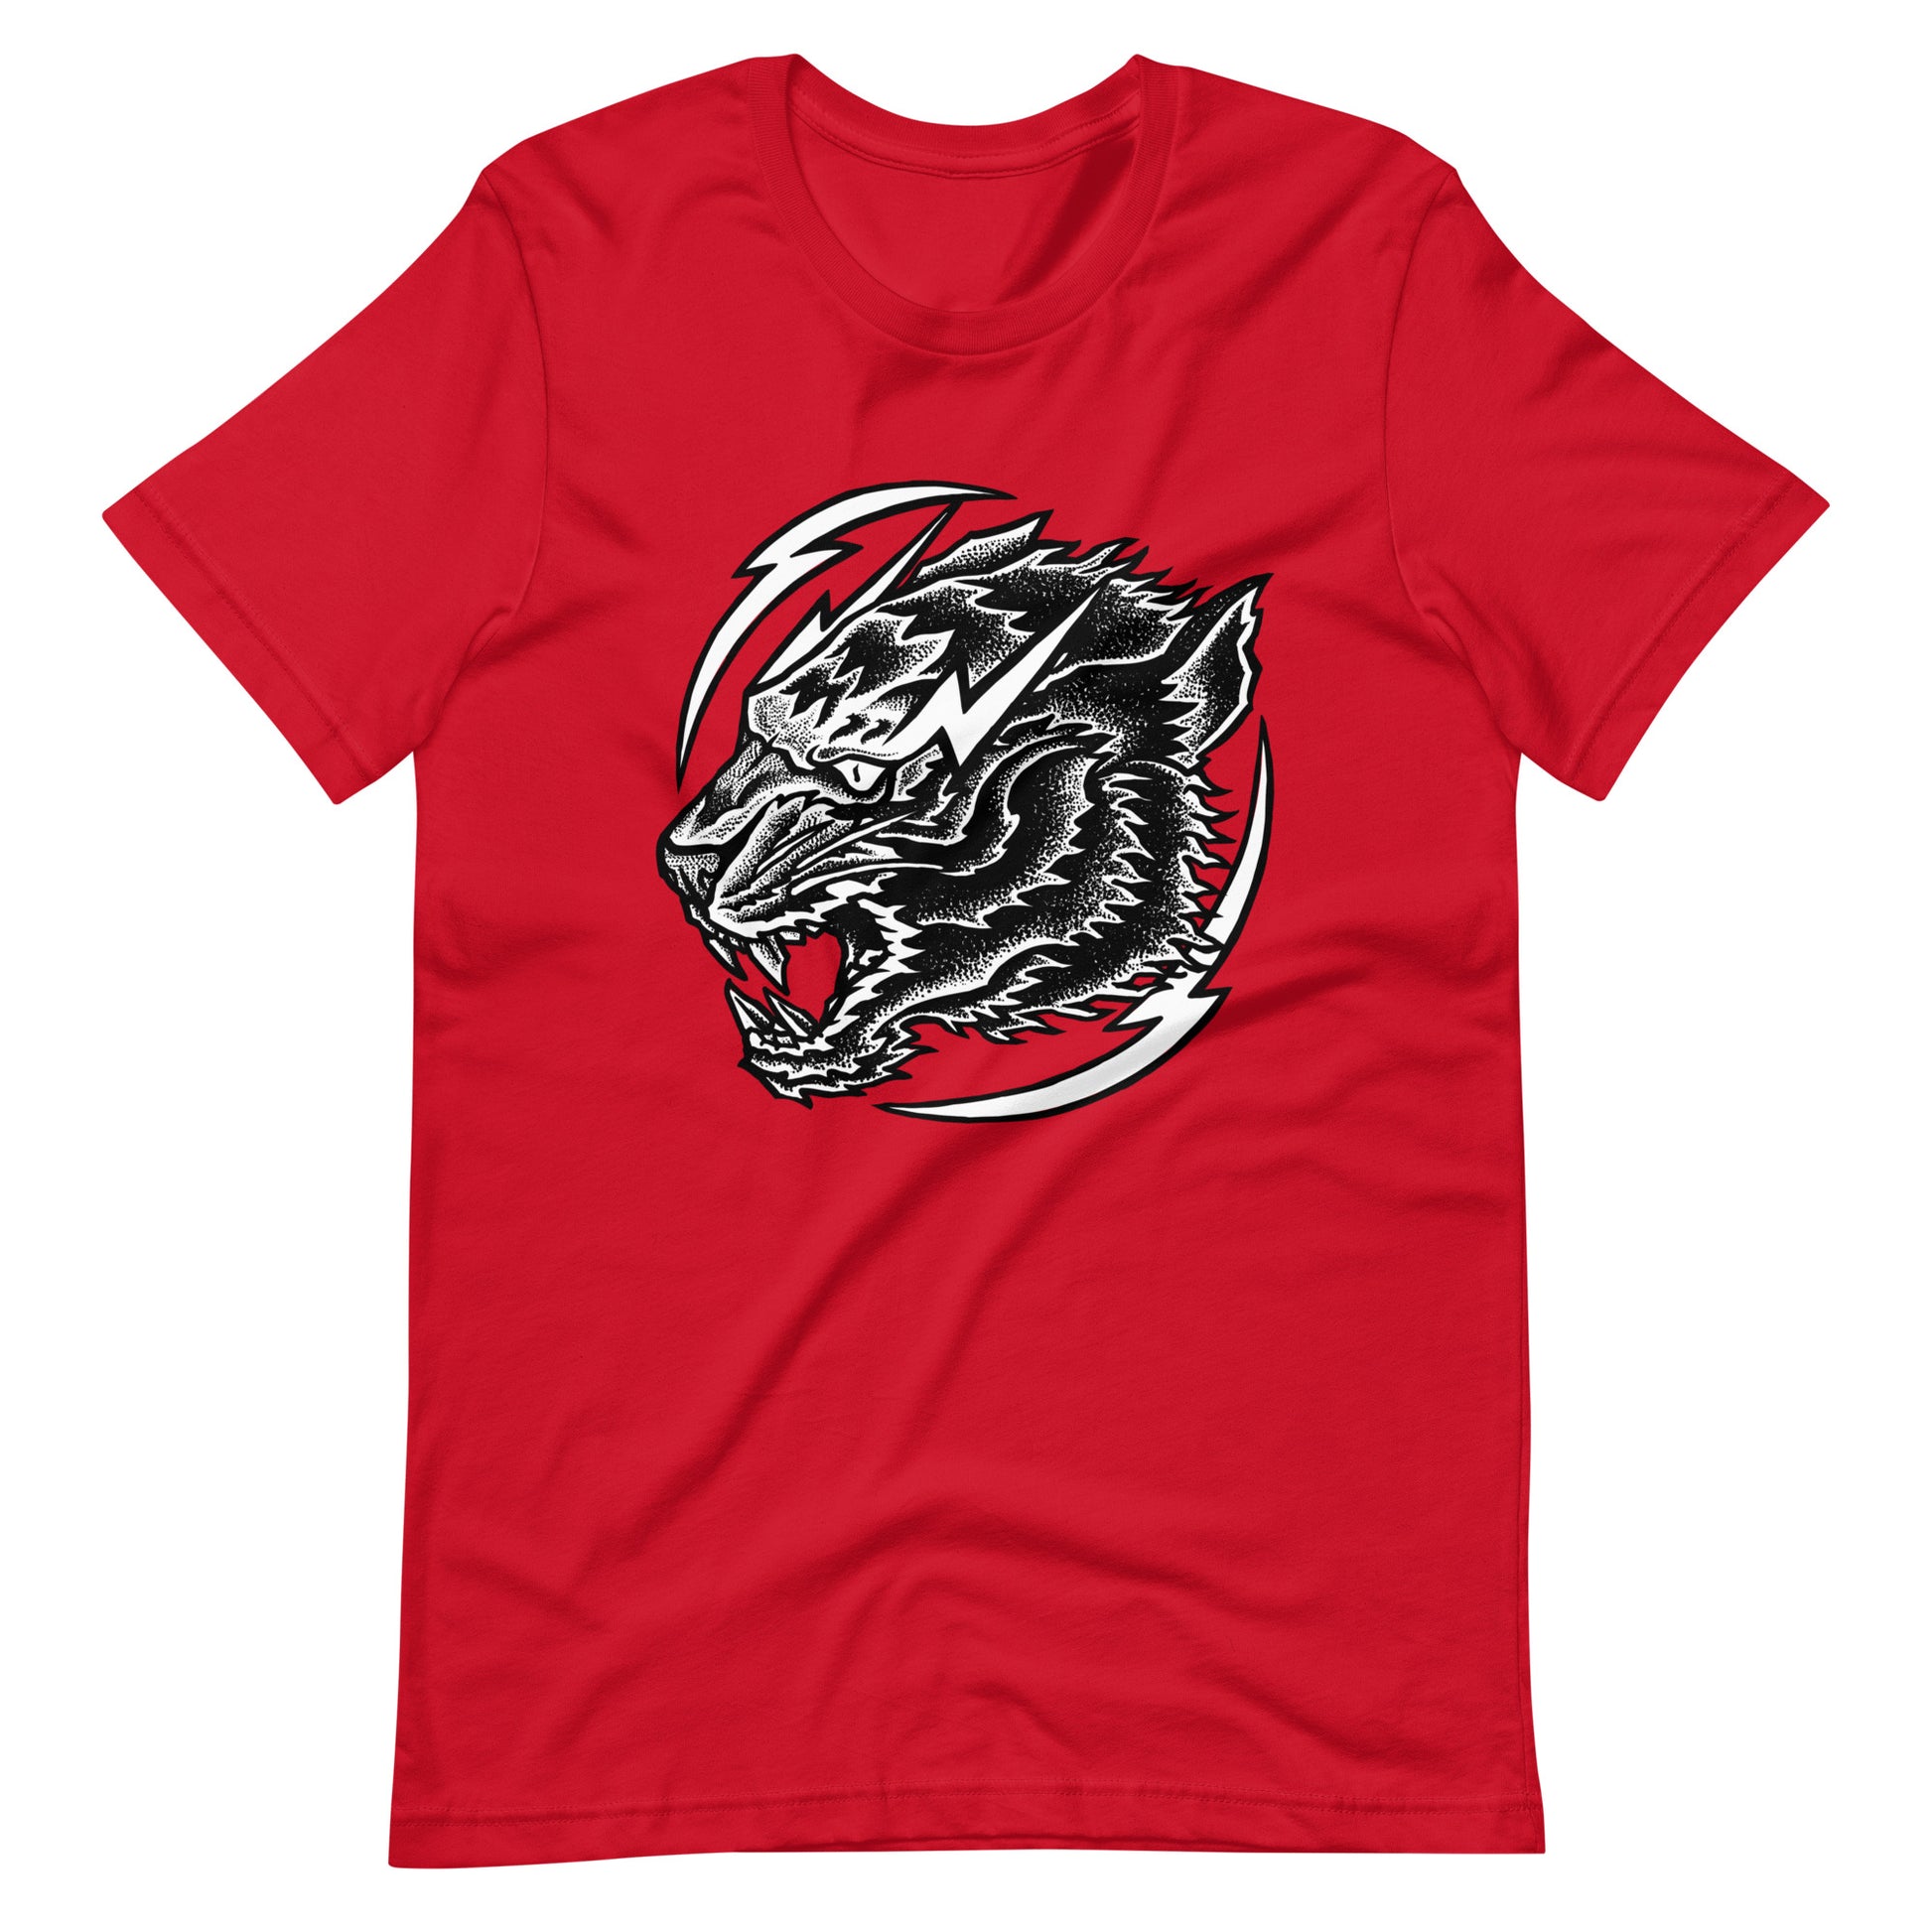 Thunder Tiger - Men's t-shirt - Red Front